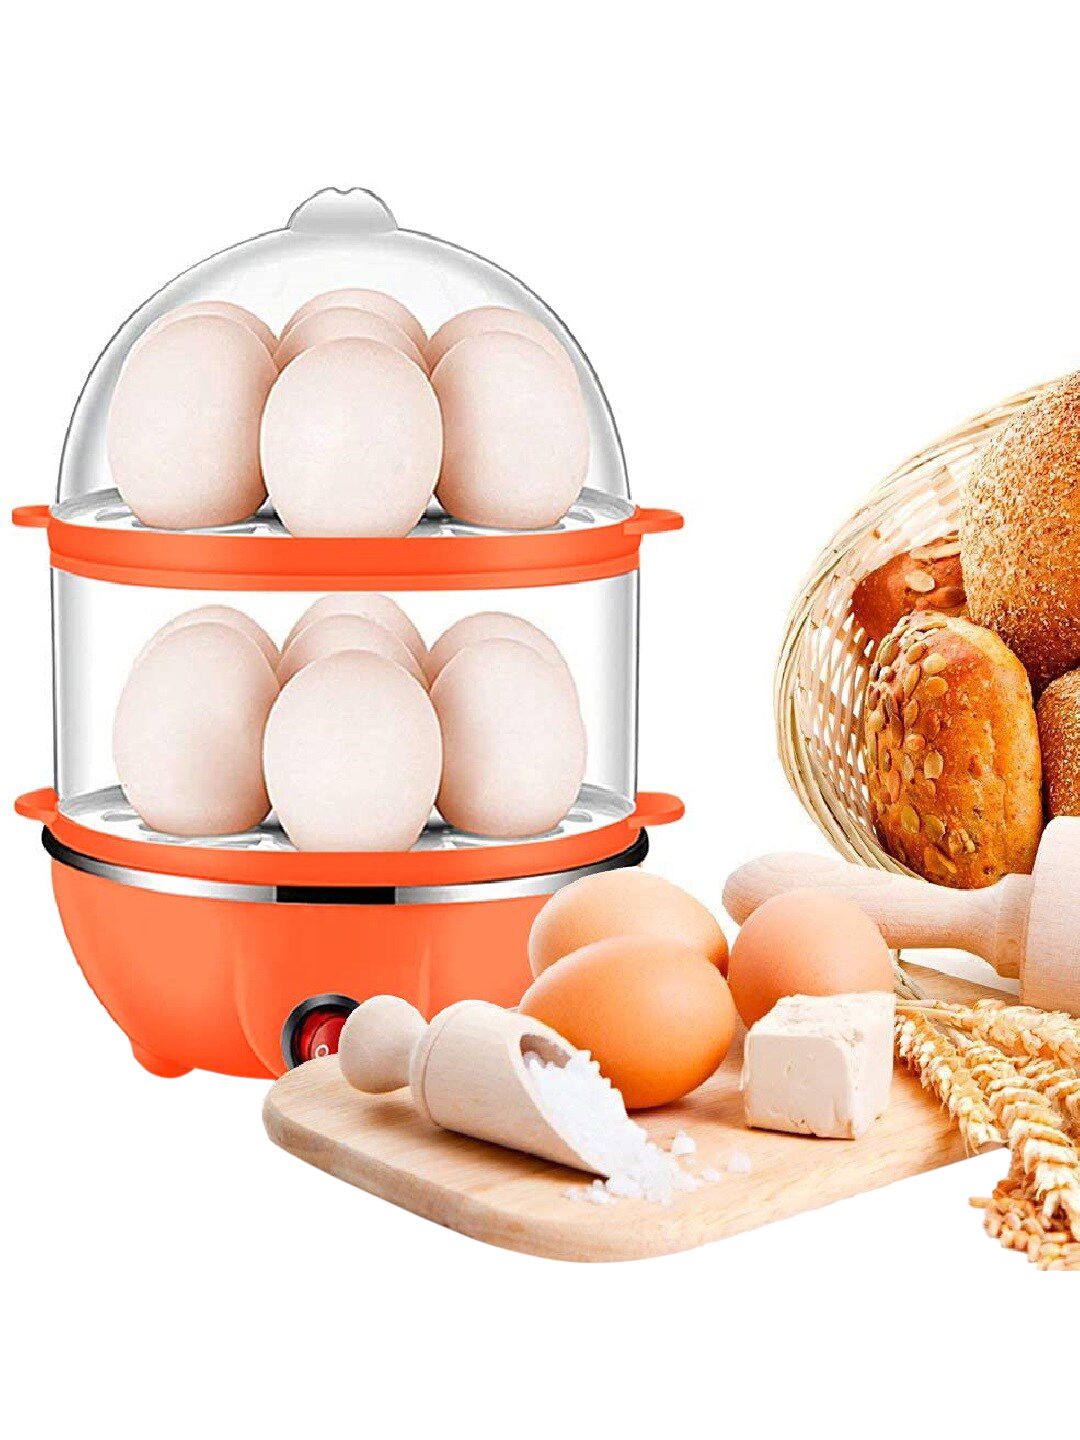 Tormeti Orange colored Multi-function Electric Egg Cooker Price in India